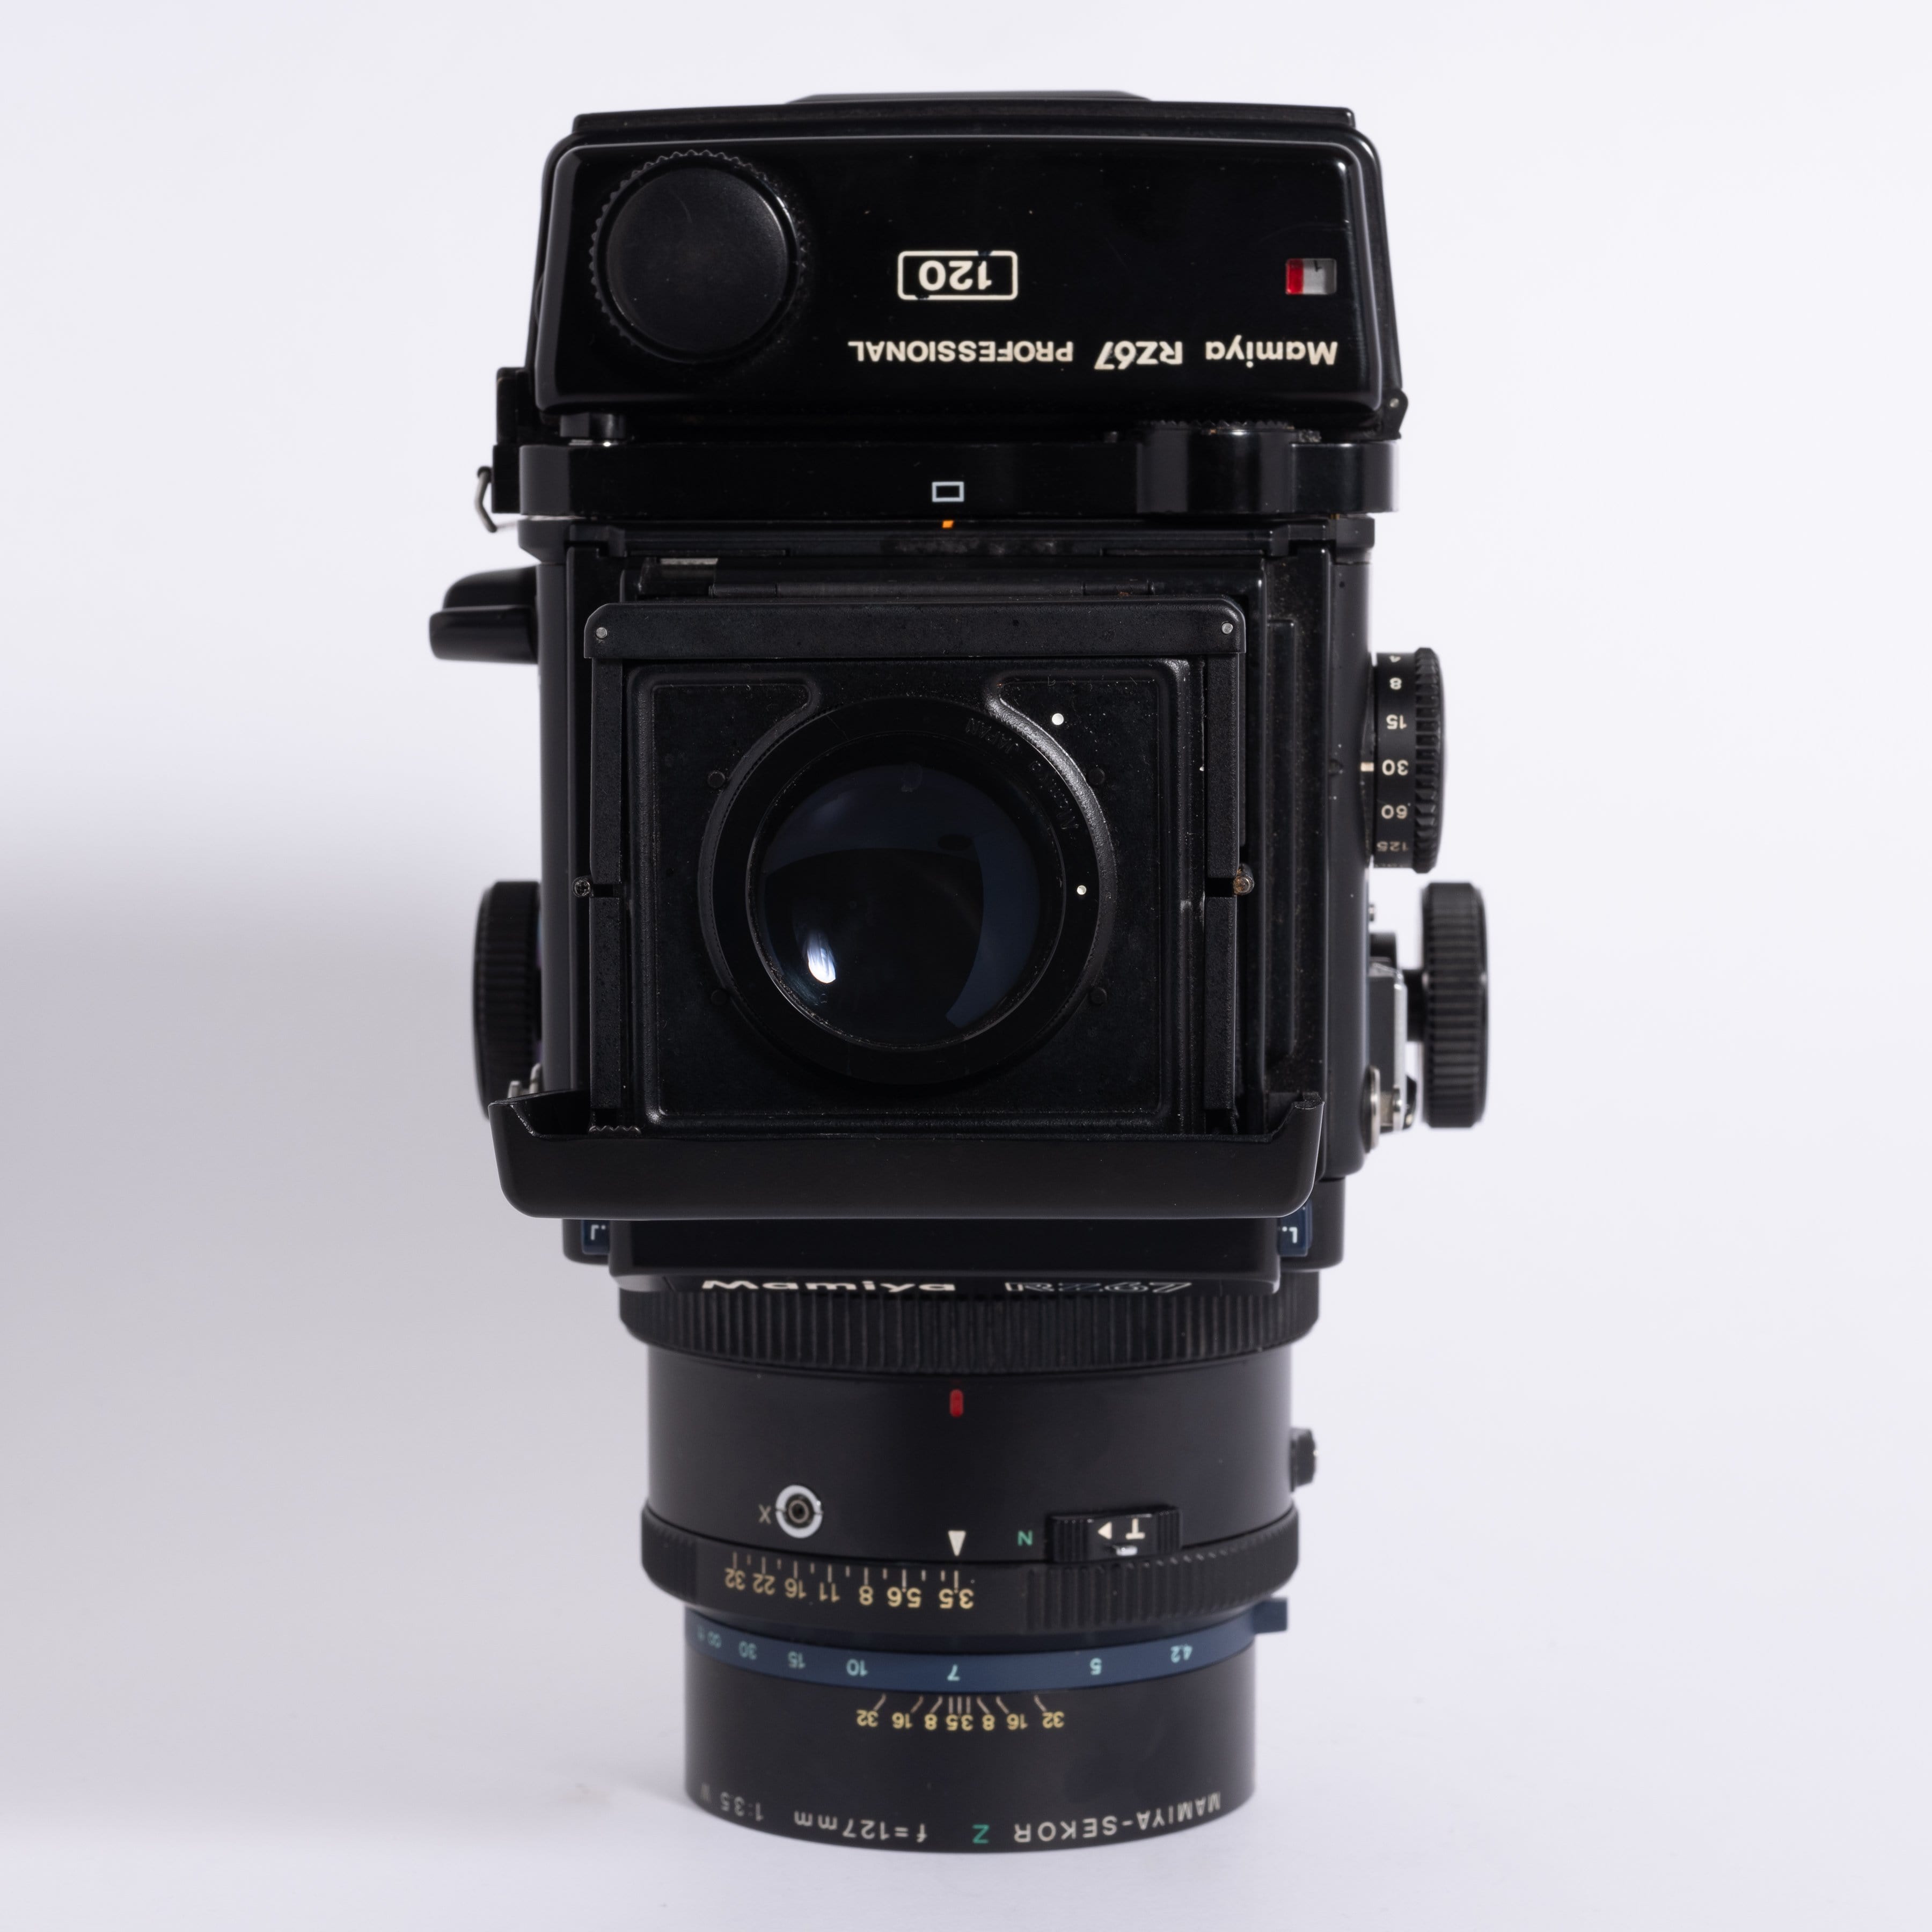 Mamiya RZ67 Professional with Mamiya-Sekor 127mm f/3.5 Lens – Film